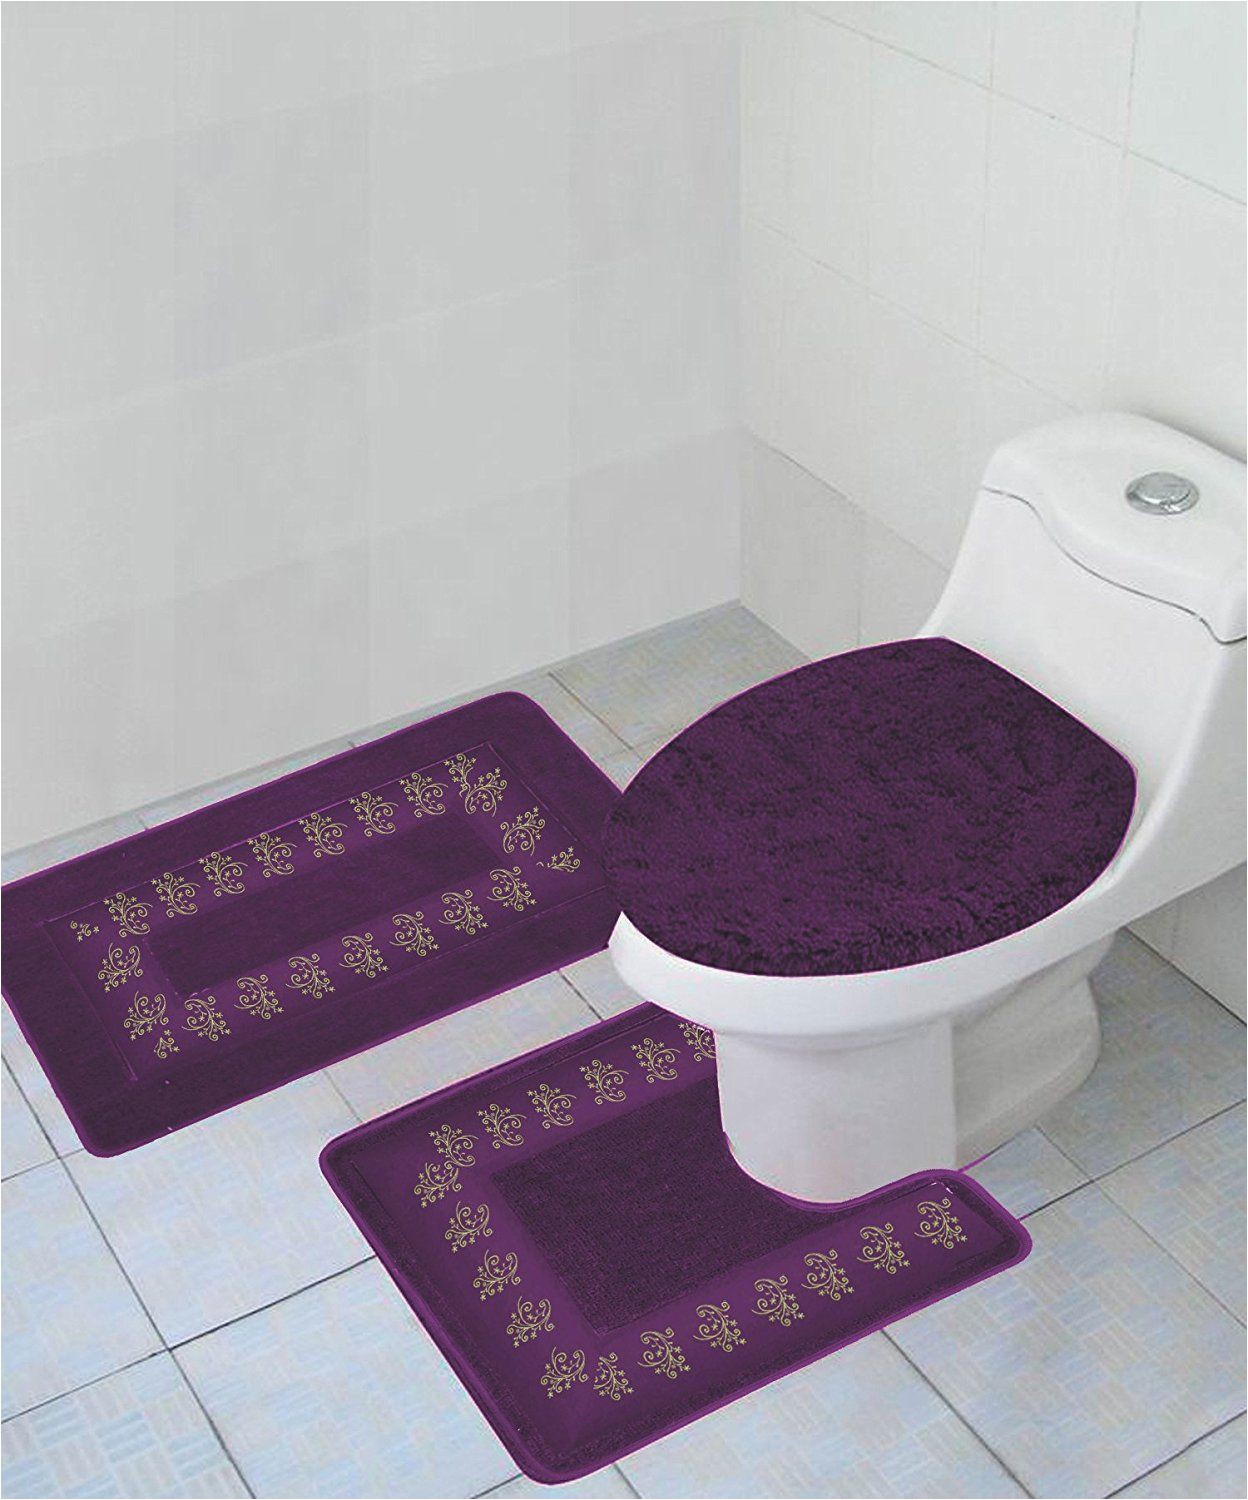 3 by 5 Bathroom Rugs 3 Pc 5 Purple Design Bathroom Bath Mat Set Includes 1